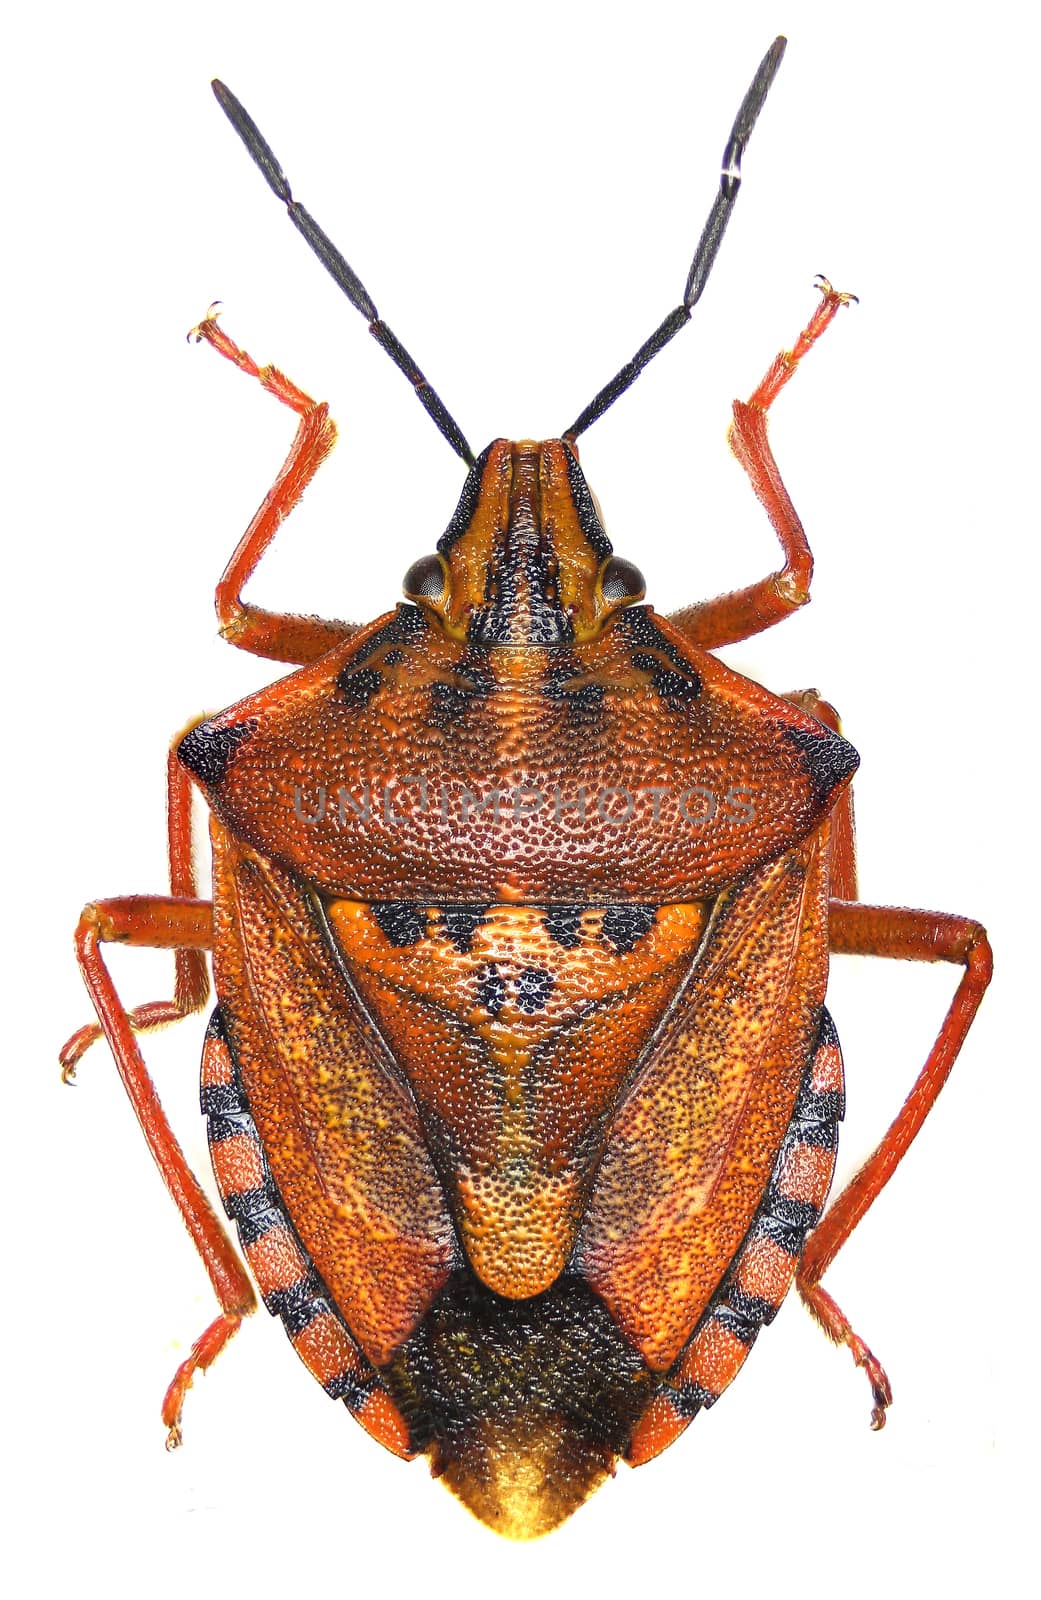 Red shield bug on white Background  -  Carpocoris mediterraneus (Tamanini, 1959) by gstalker